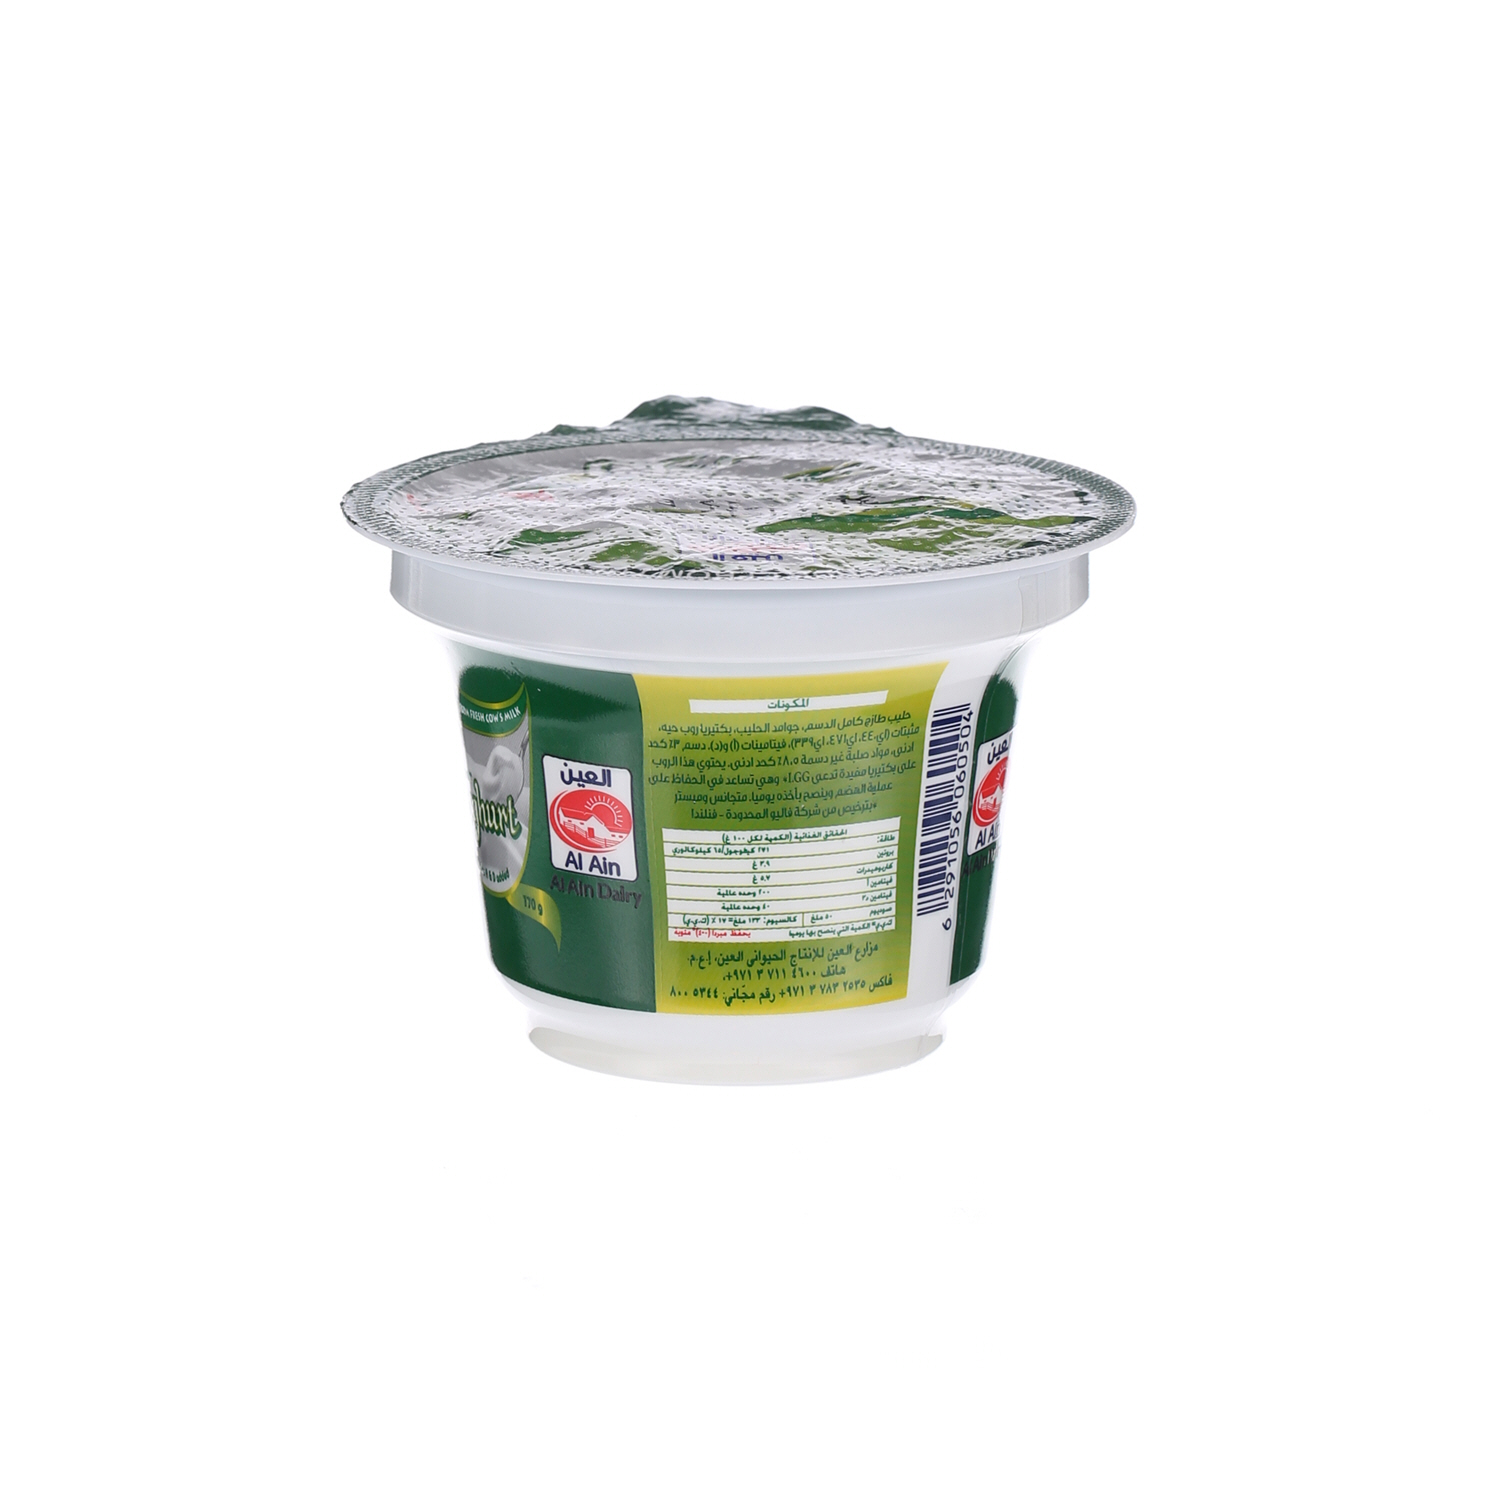 Al Ain Fresh Youghurt Full Cream 170gm